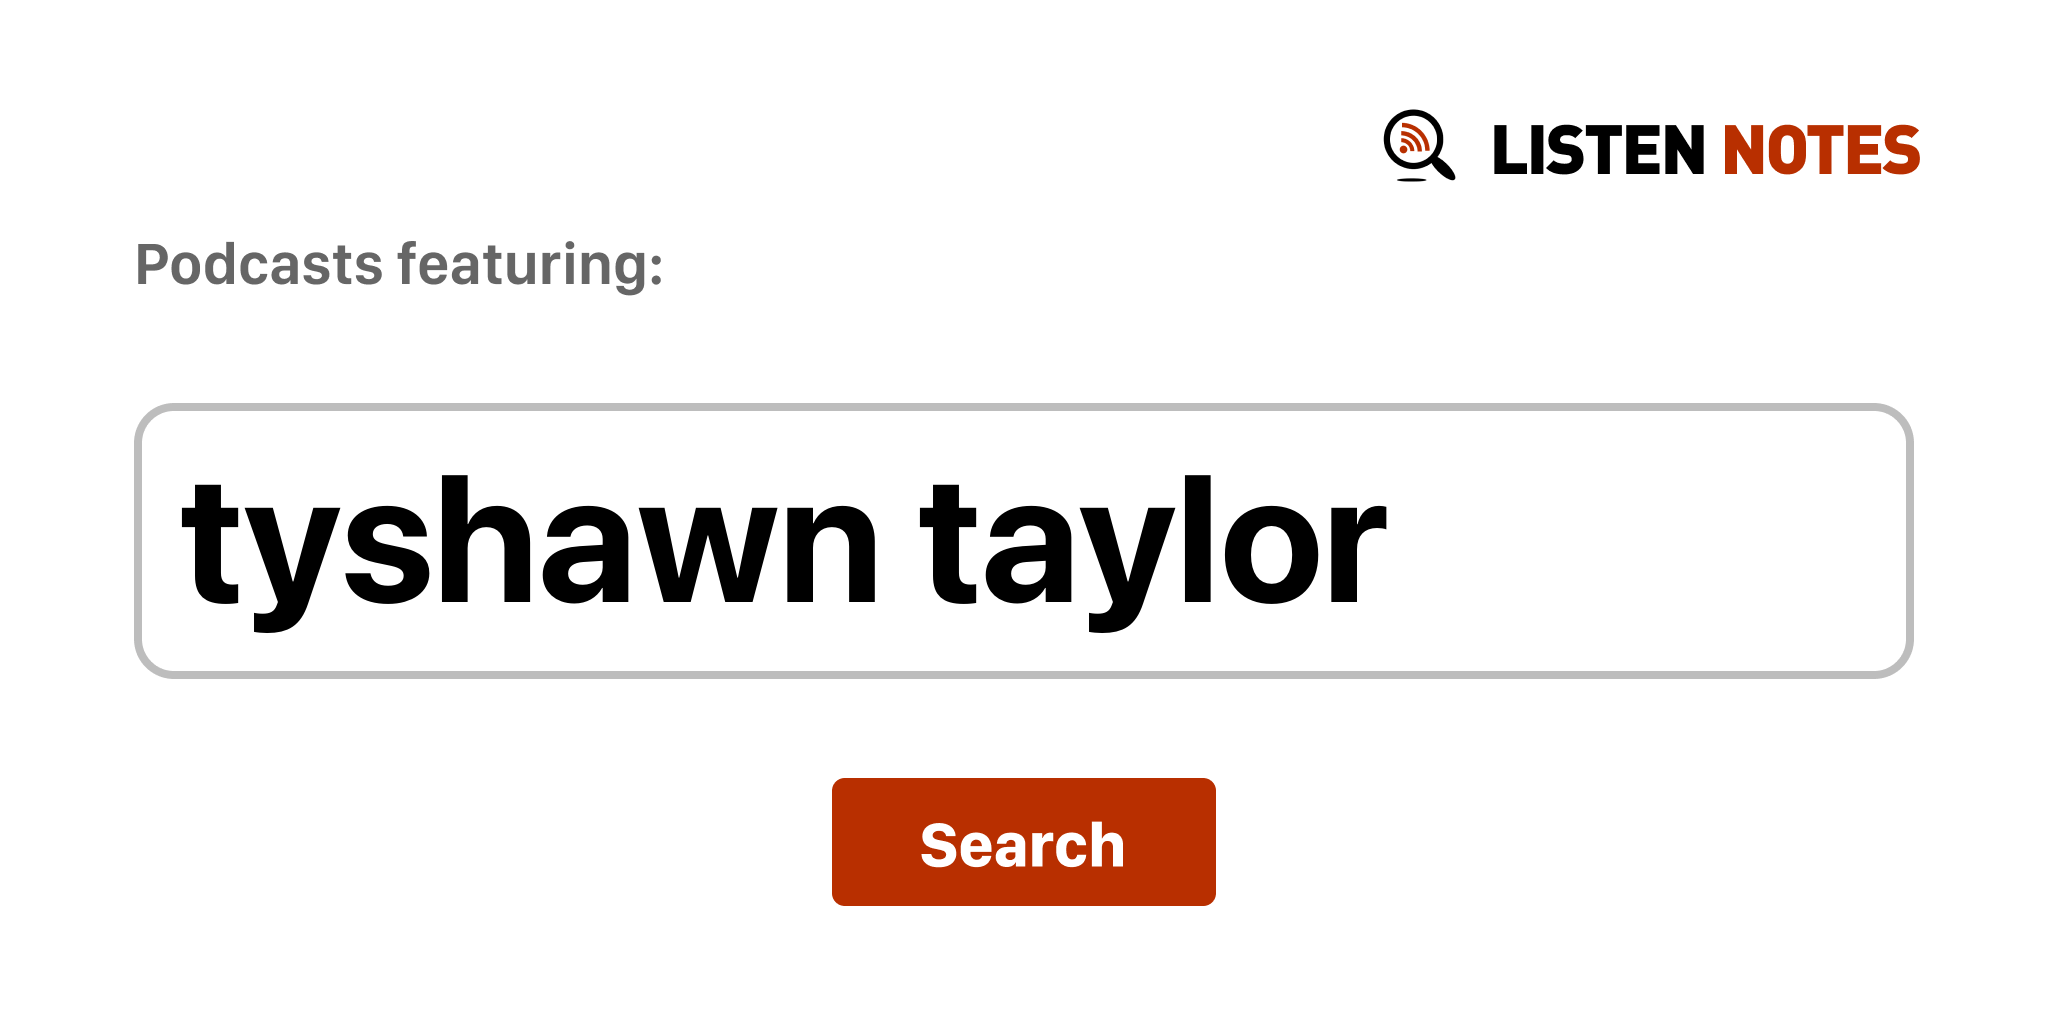 Tyshawn Taylor - Wikipedia